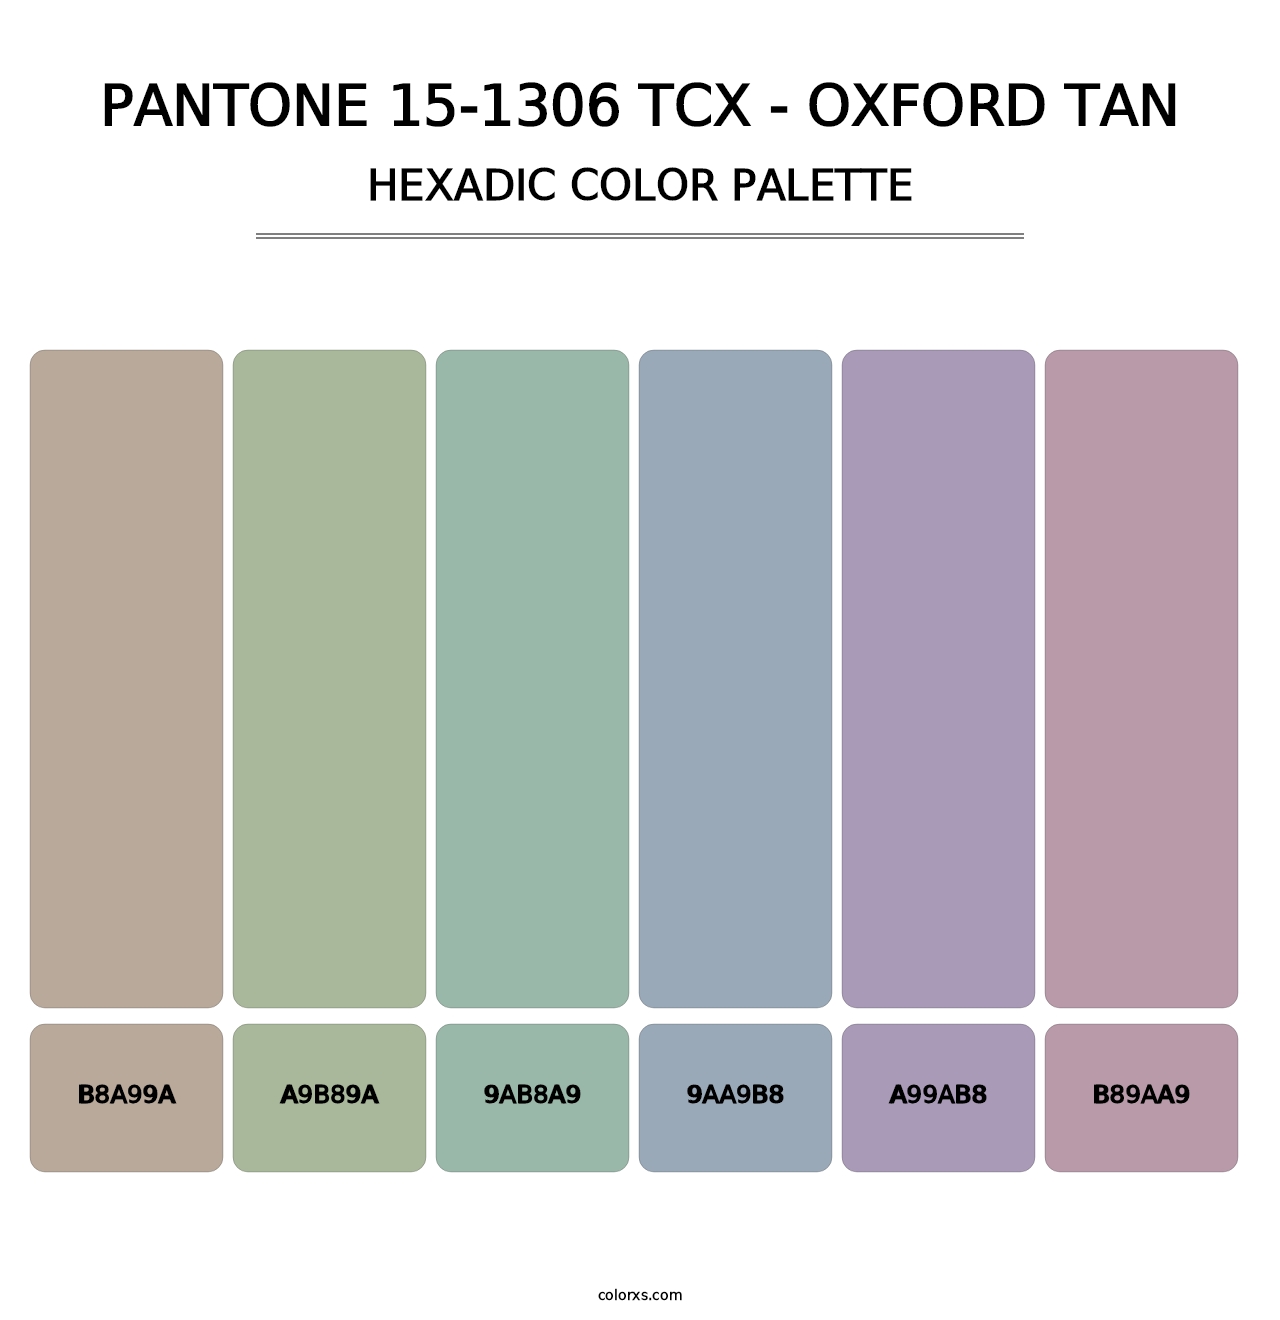 PANTONE 15-1306 TCX - Oxford Tan - Hexadic Color Palette